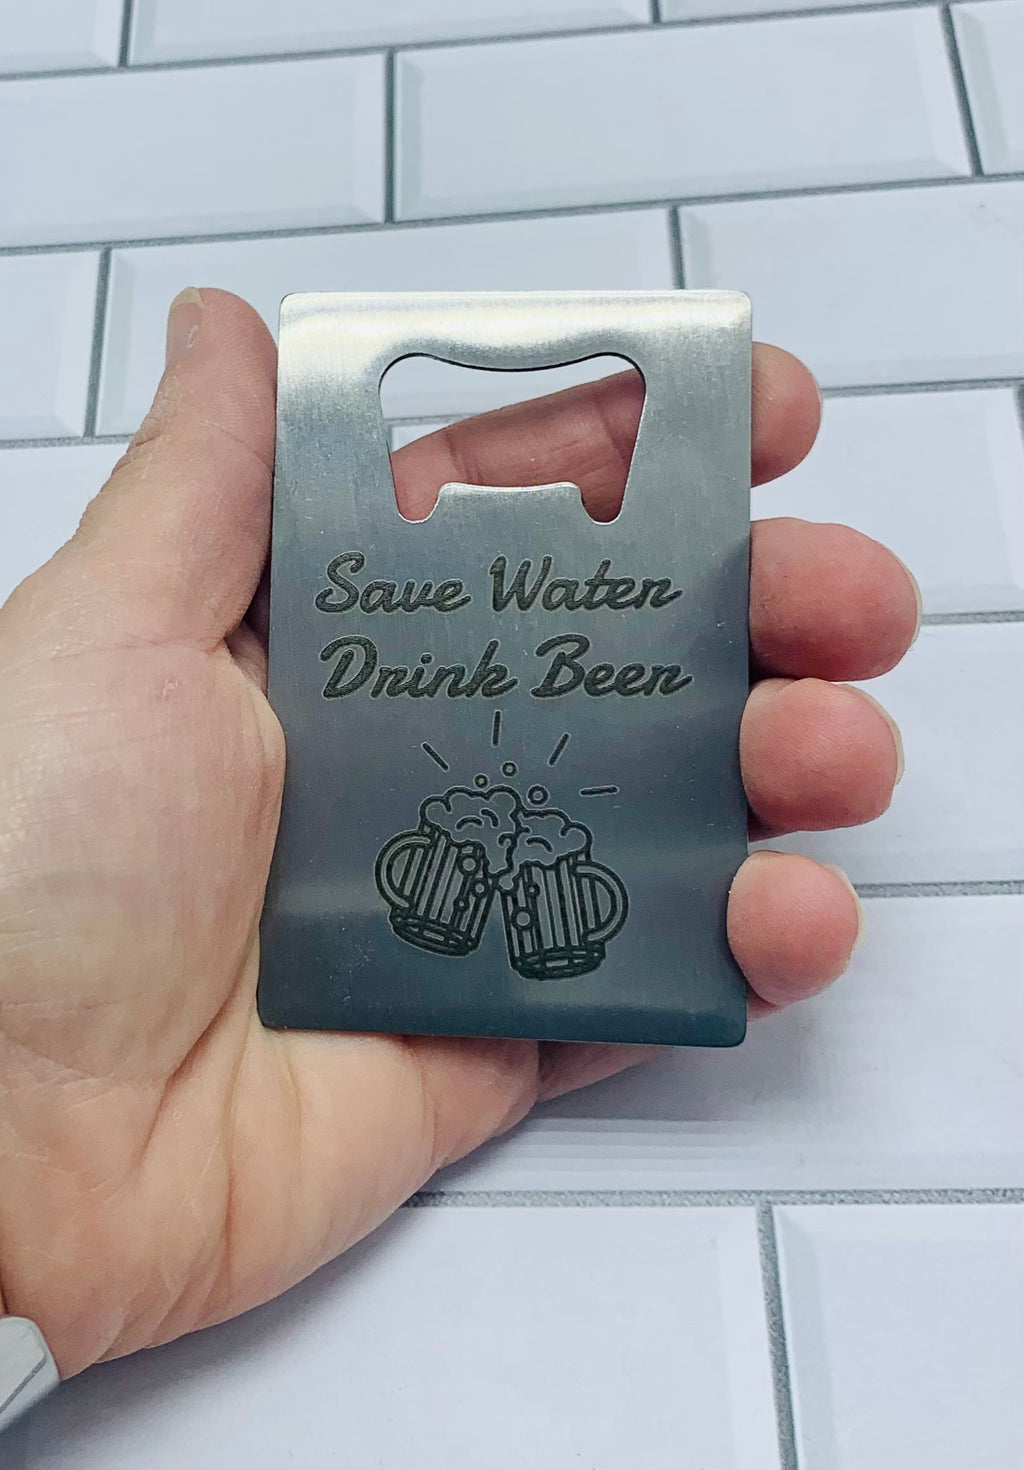 Credit Card Shaped Bottle Opener: Save Water Drink Beer